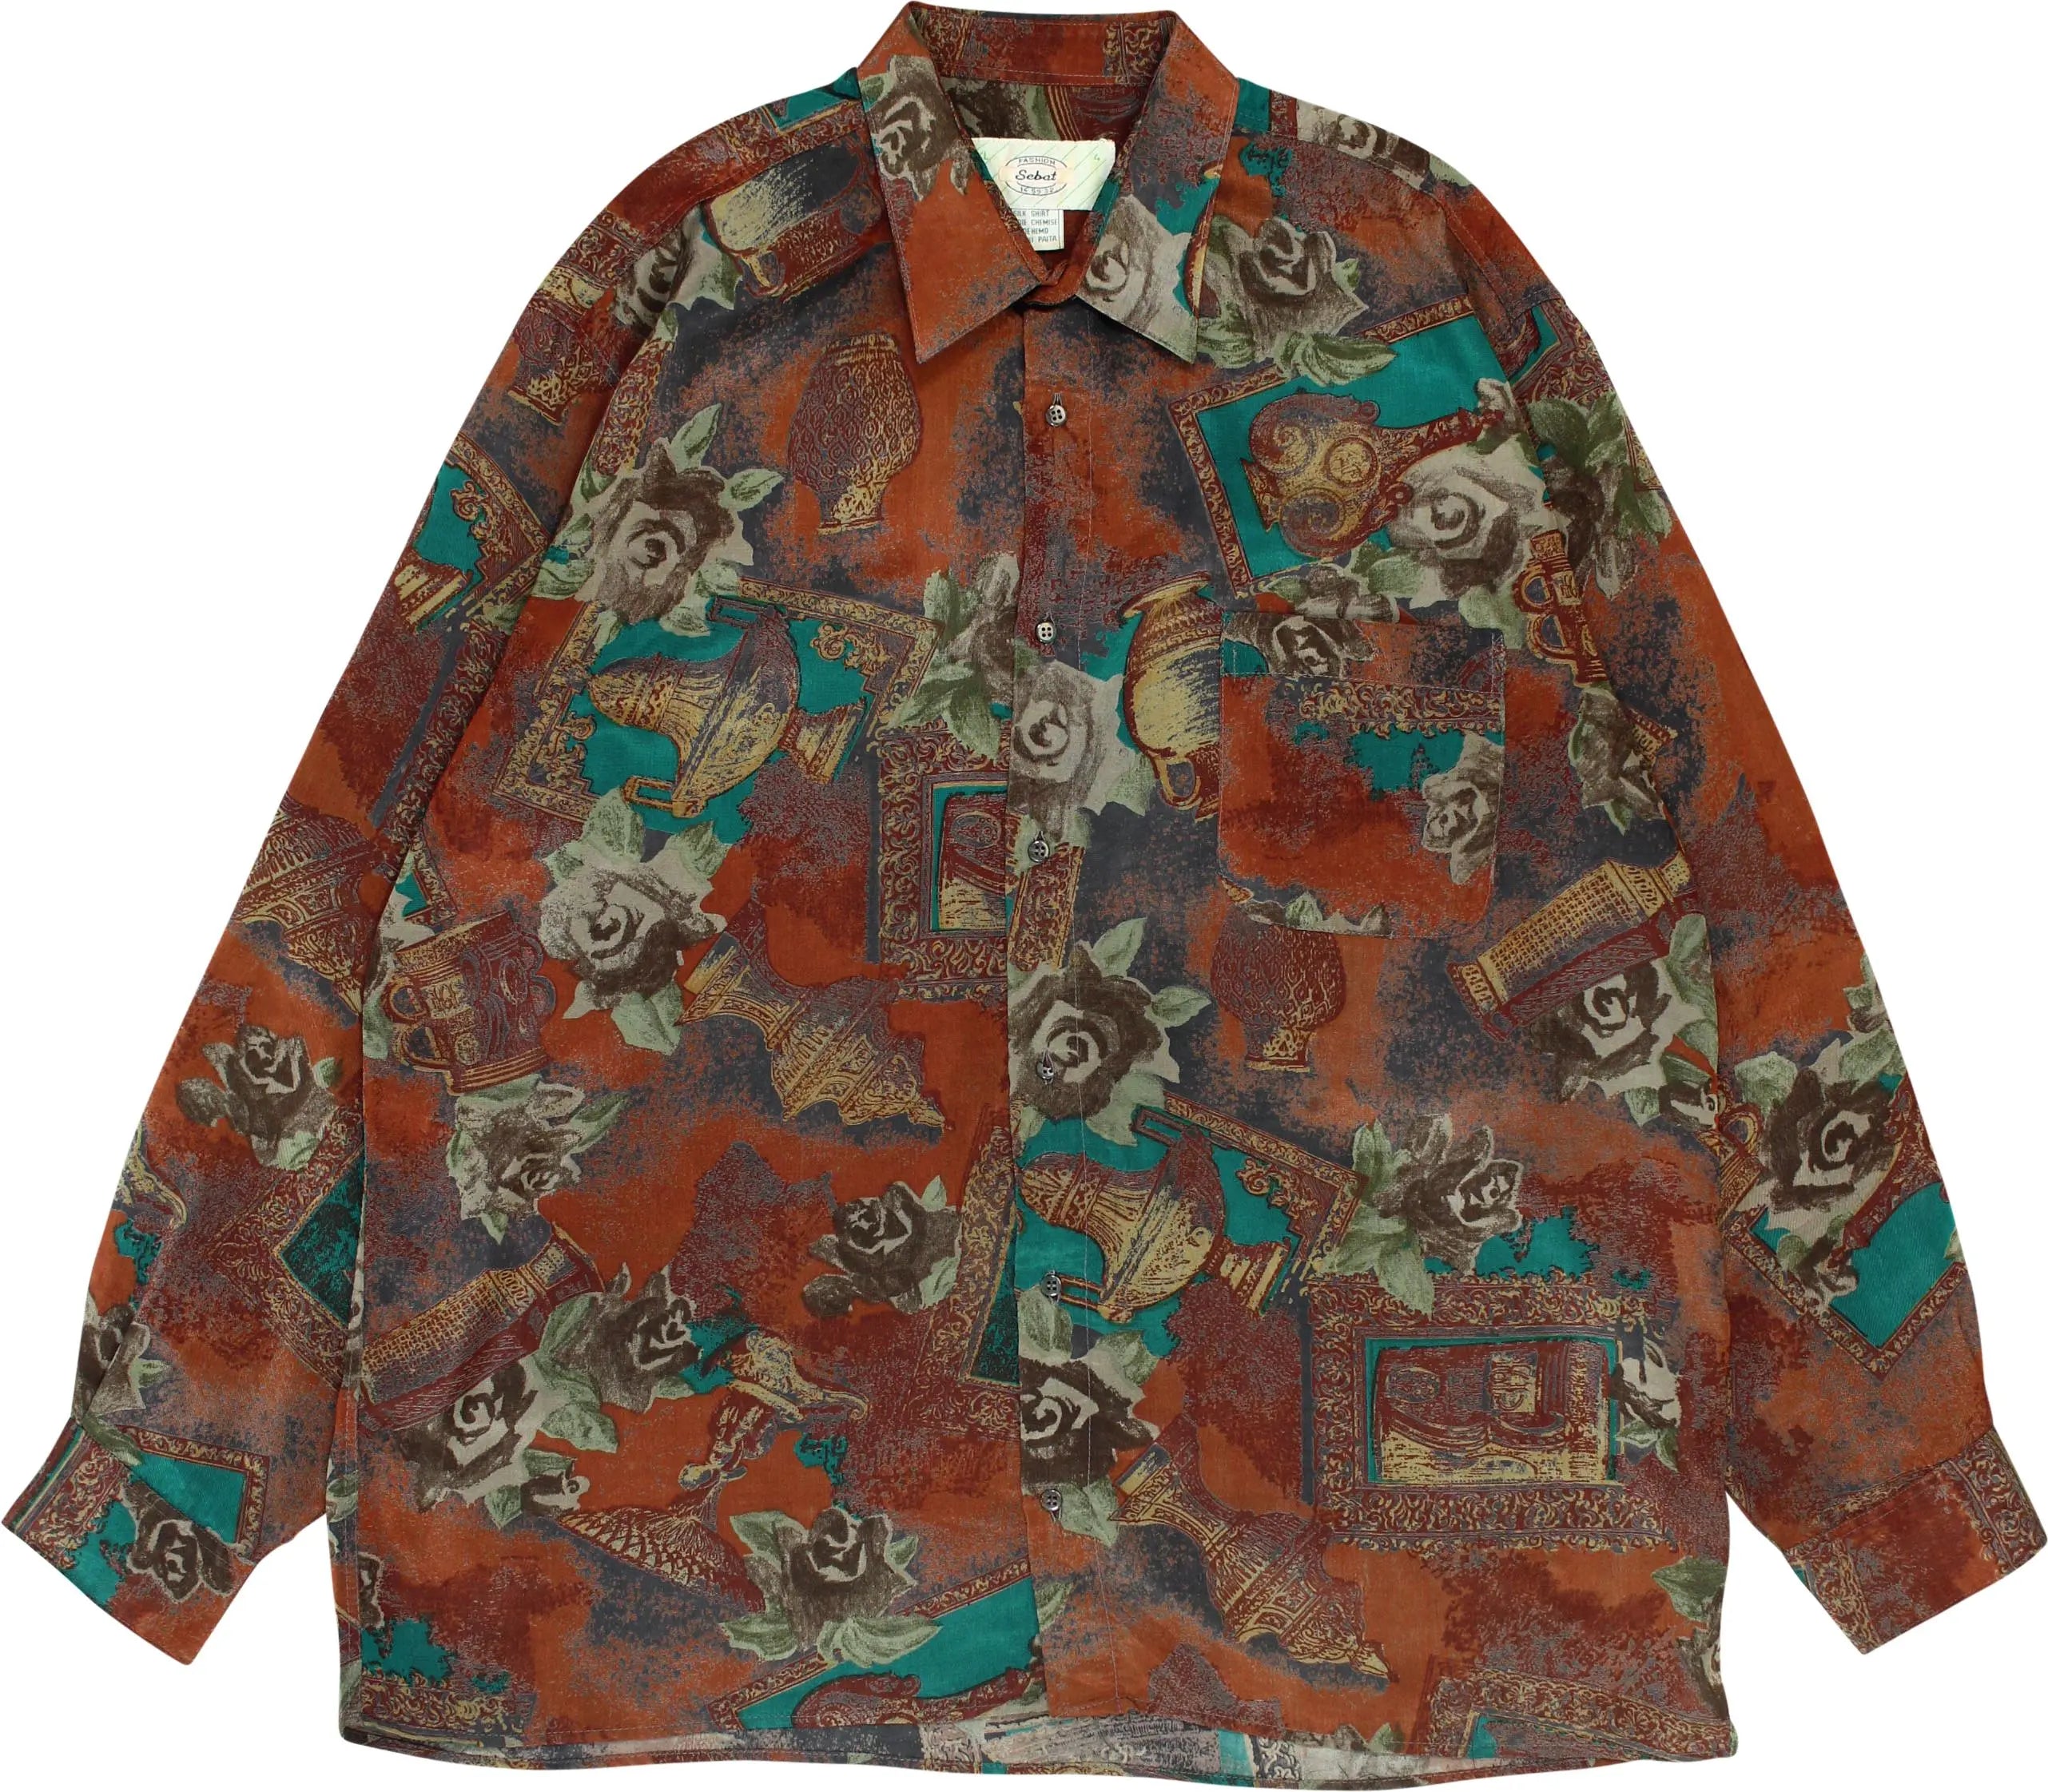 Sebat - 90s Silk Shirt- ThriftTale.com - Vintage and second handclothing